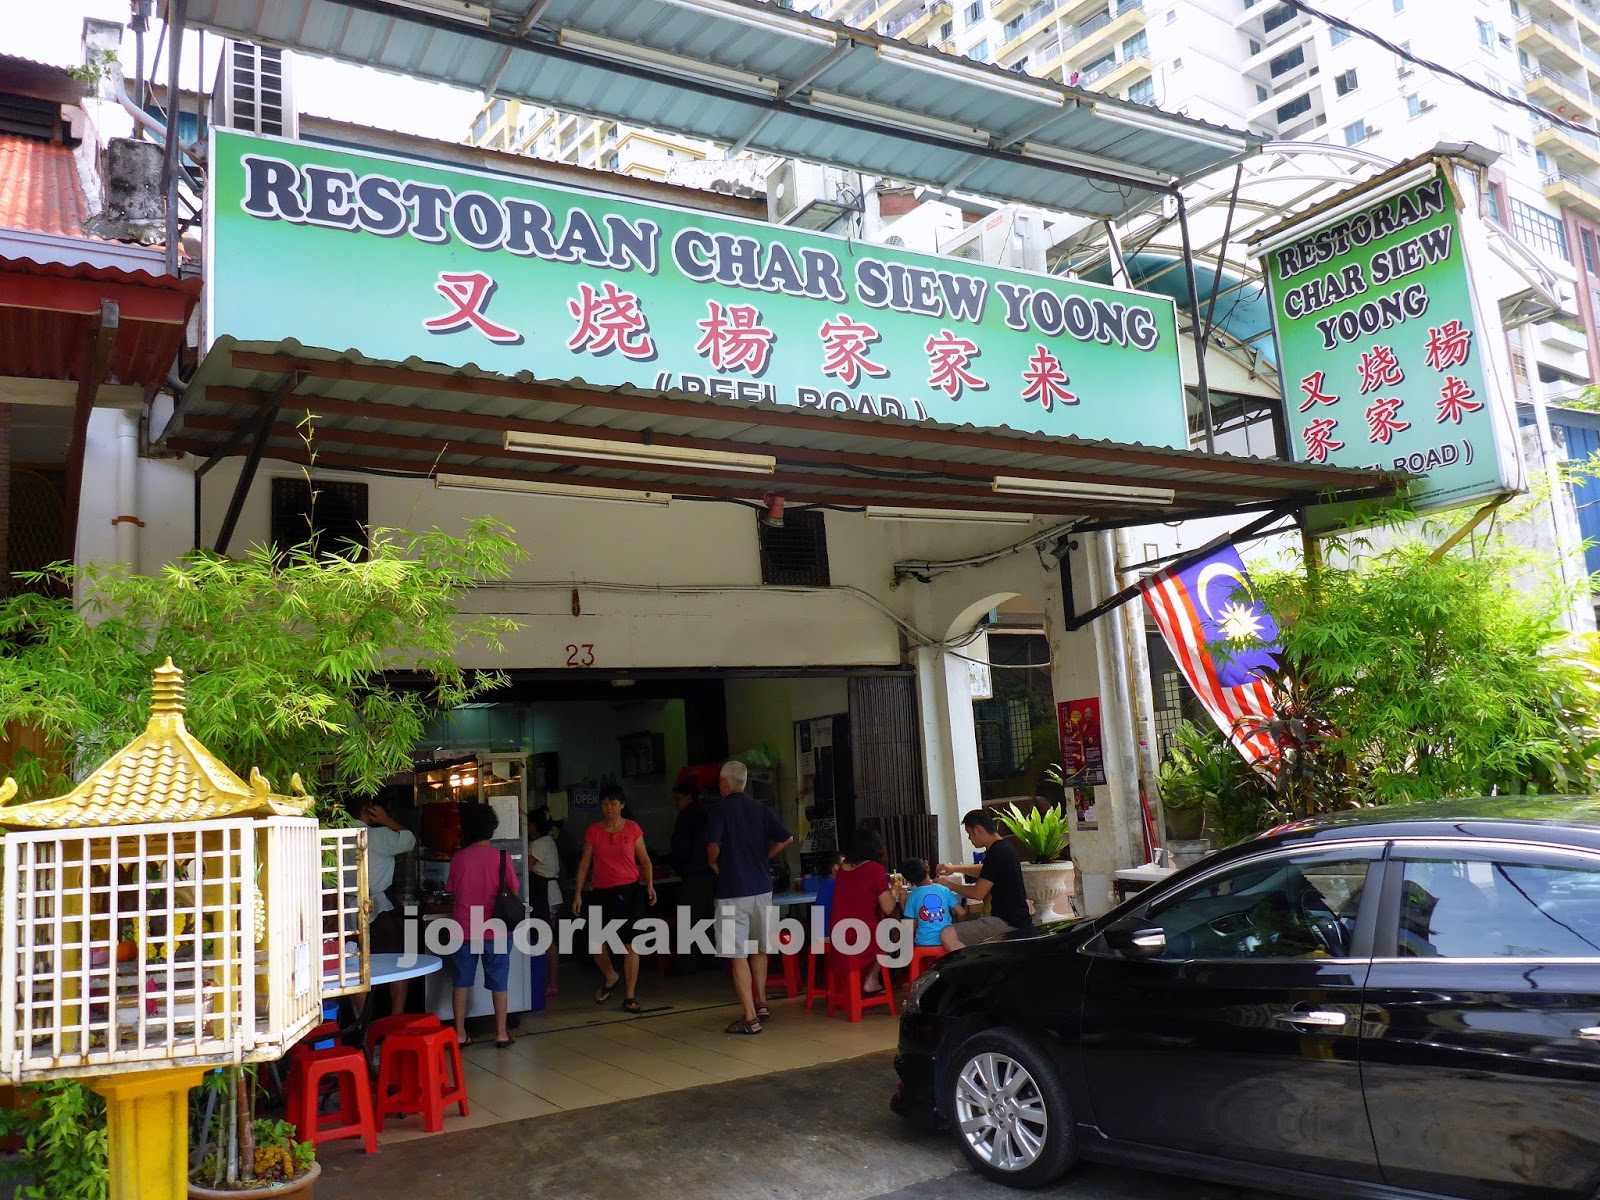 Char Siew Yoong Pudu Hulu Best Kl Char Siew List 叉烧杨家家来 Johor Kaki Travels For Food